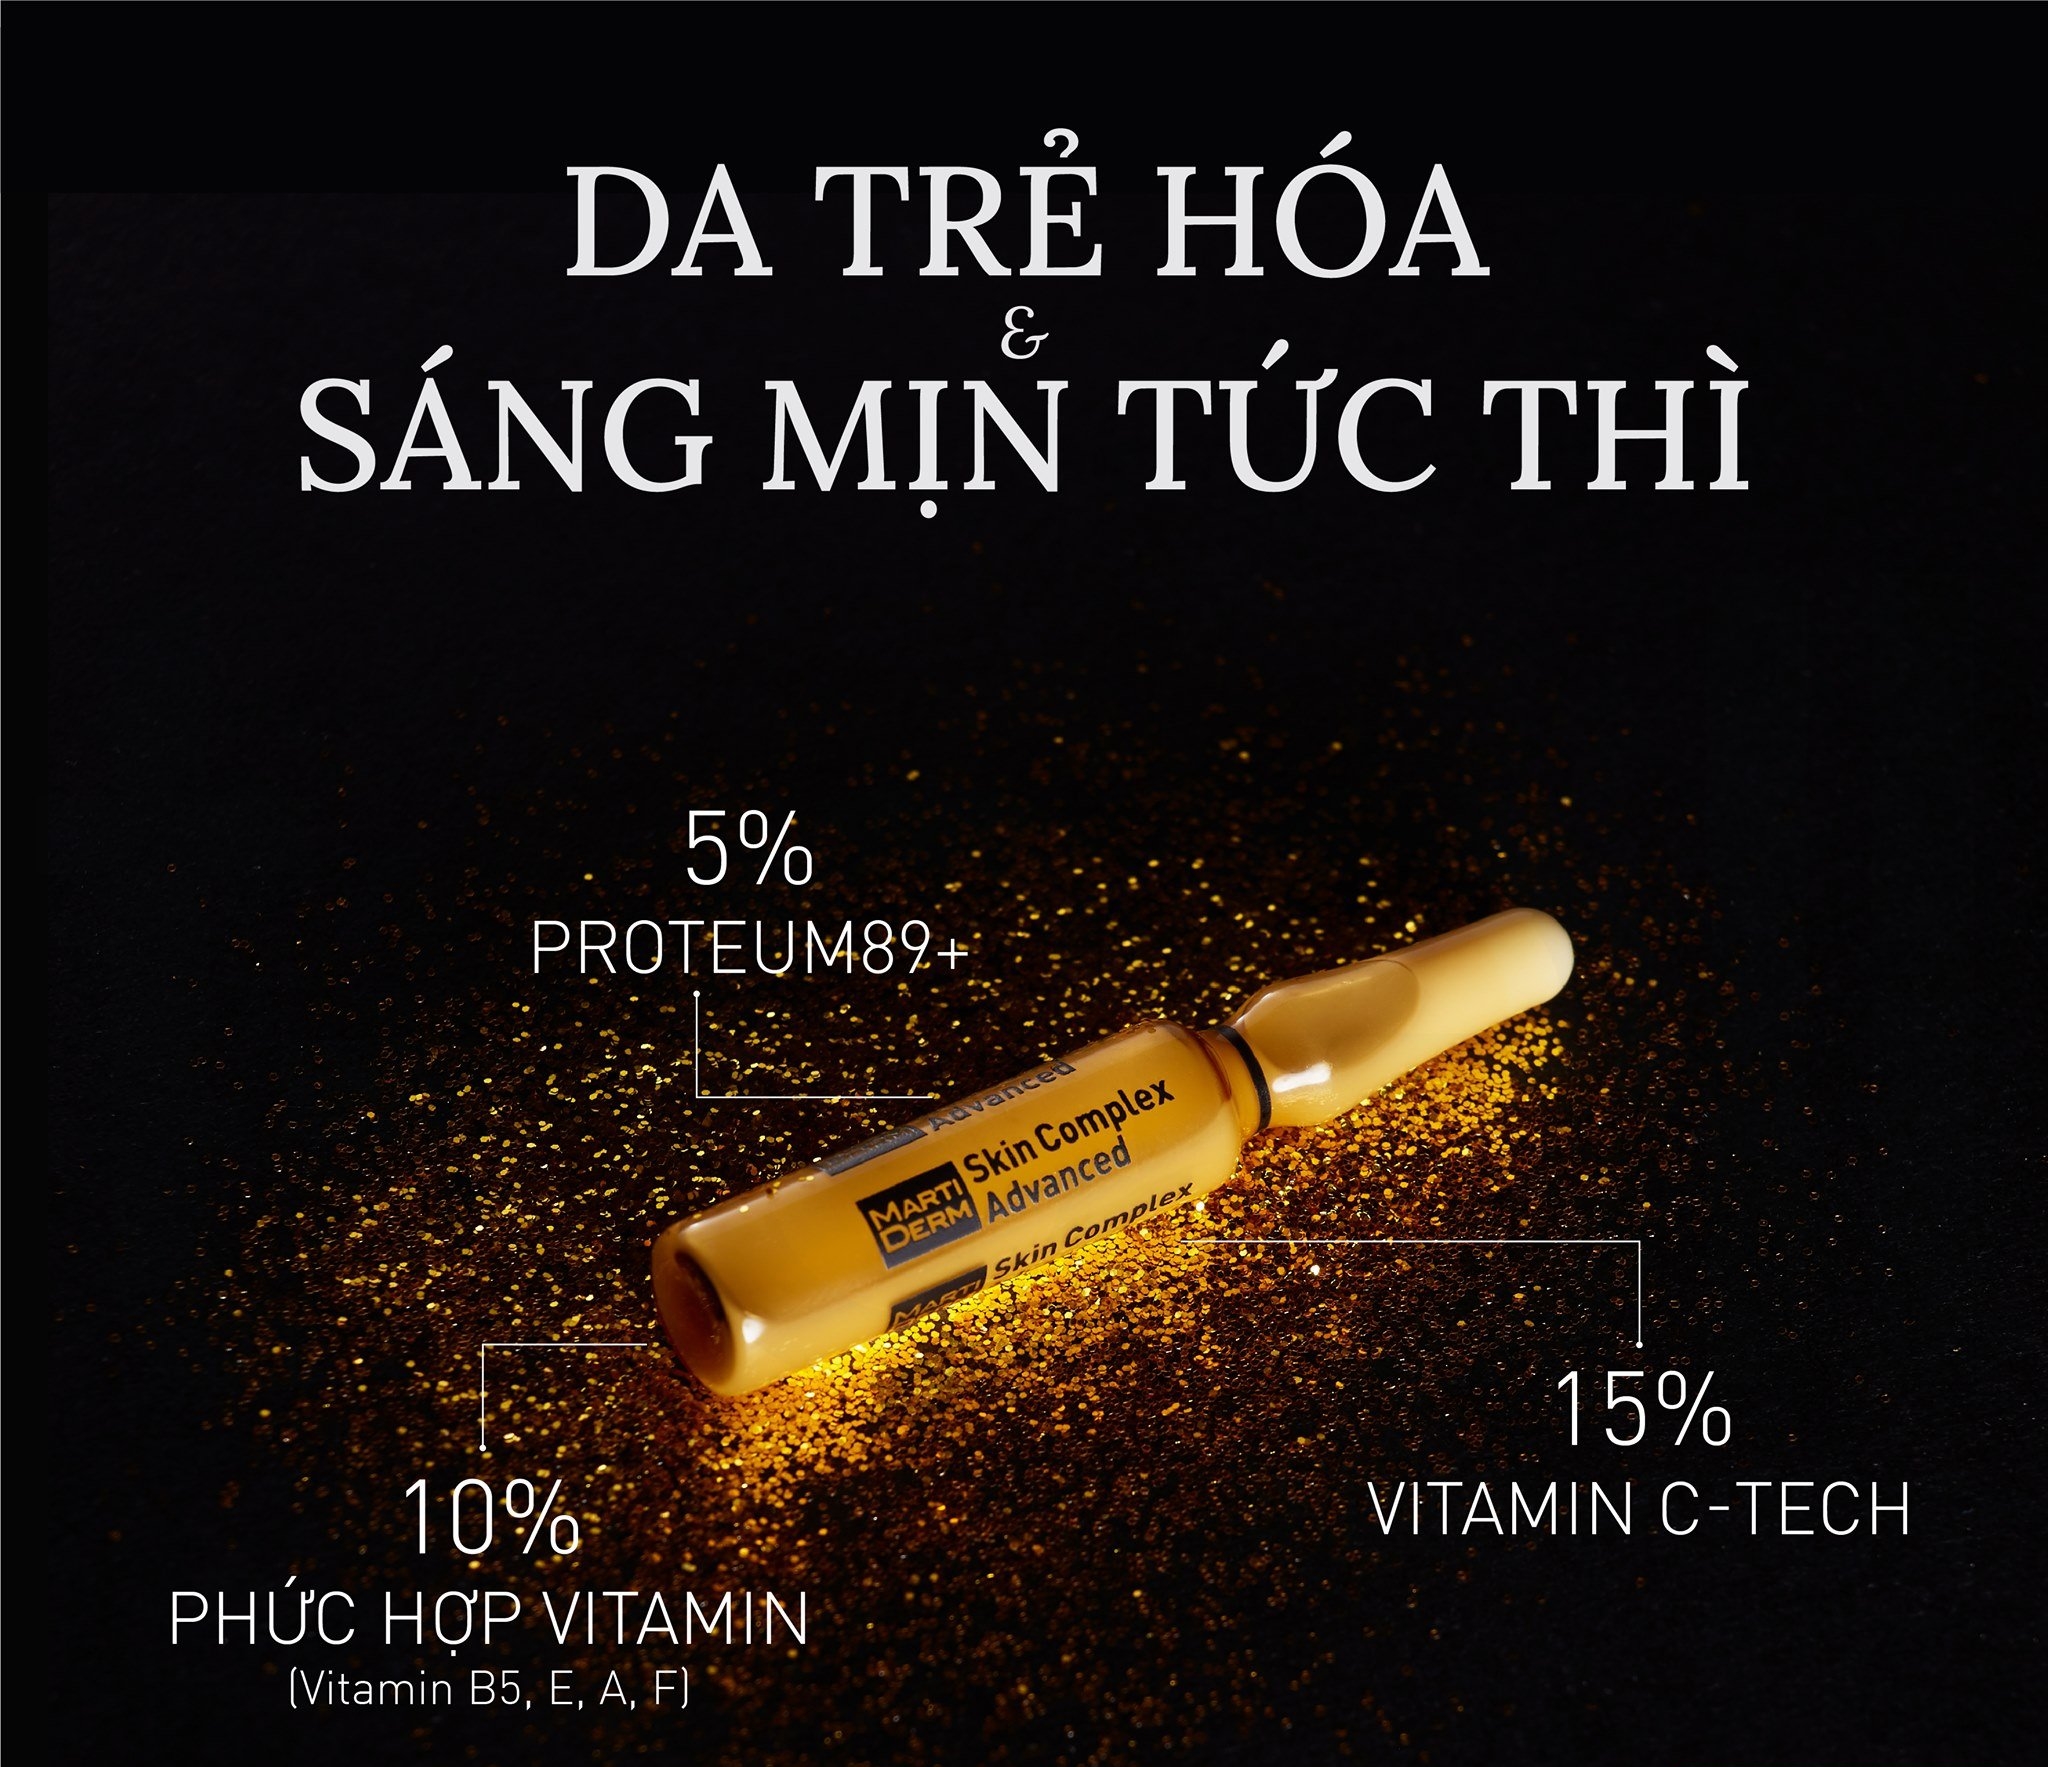 Ampoule Chống Oxy Hoá, Trẻ Hóa & Làm Sáng Da 5% Proteum 89+, 15% Vitamin C-Tech - MartiDerm Black Diamond Skin Complex Advanced 30amp